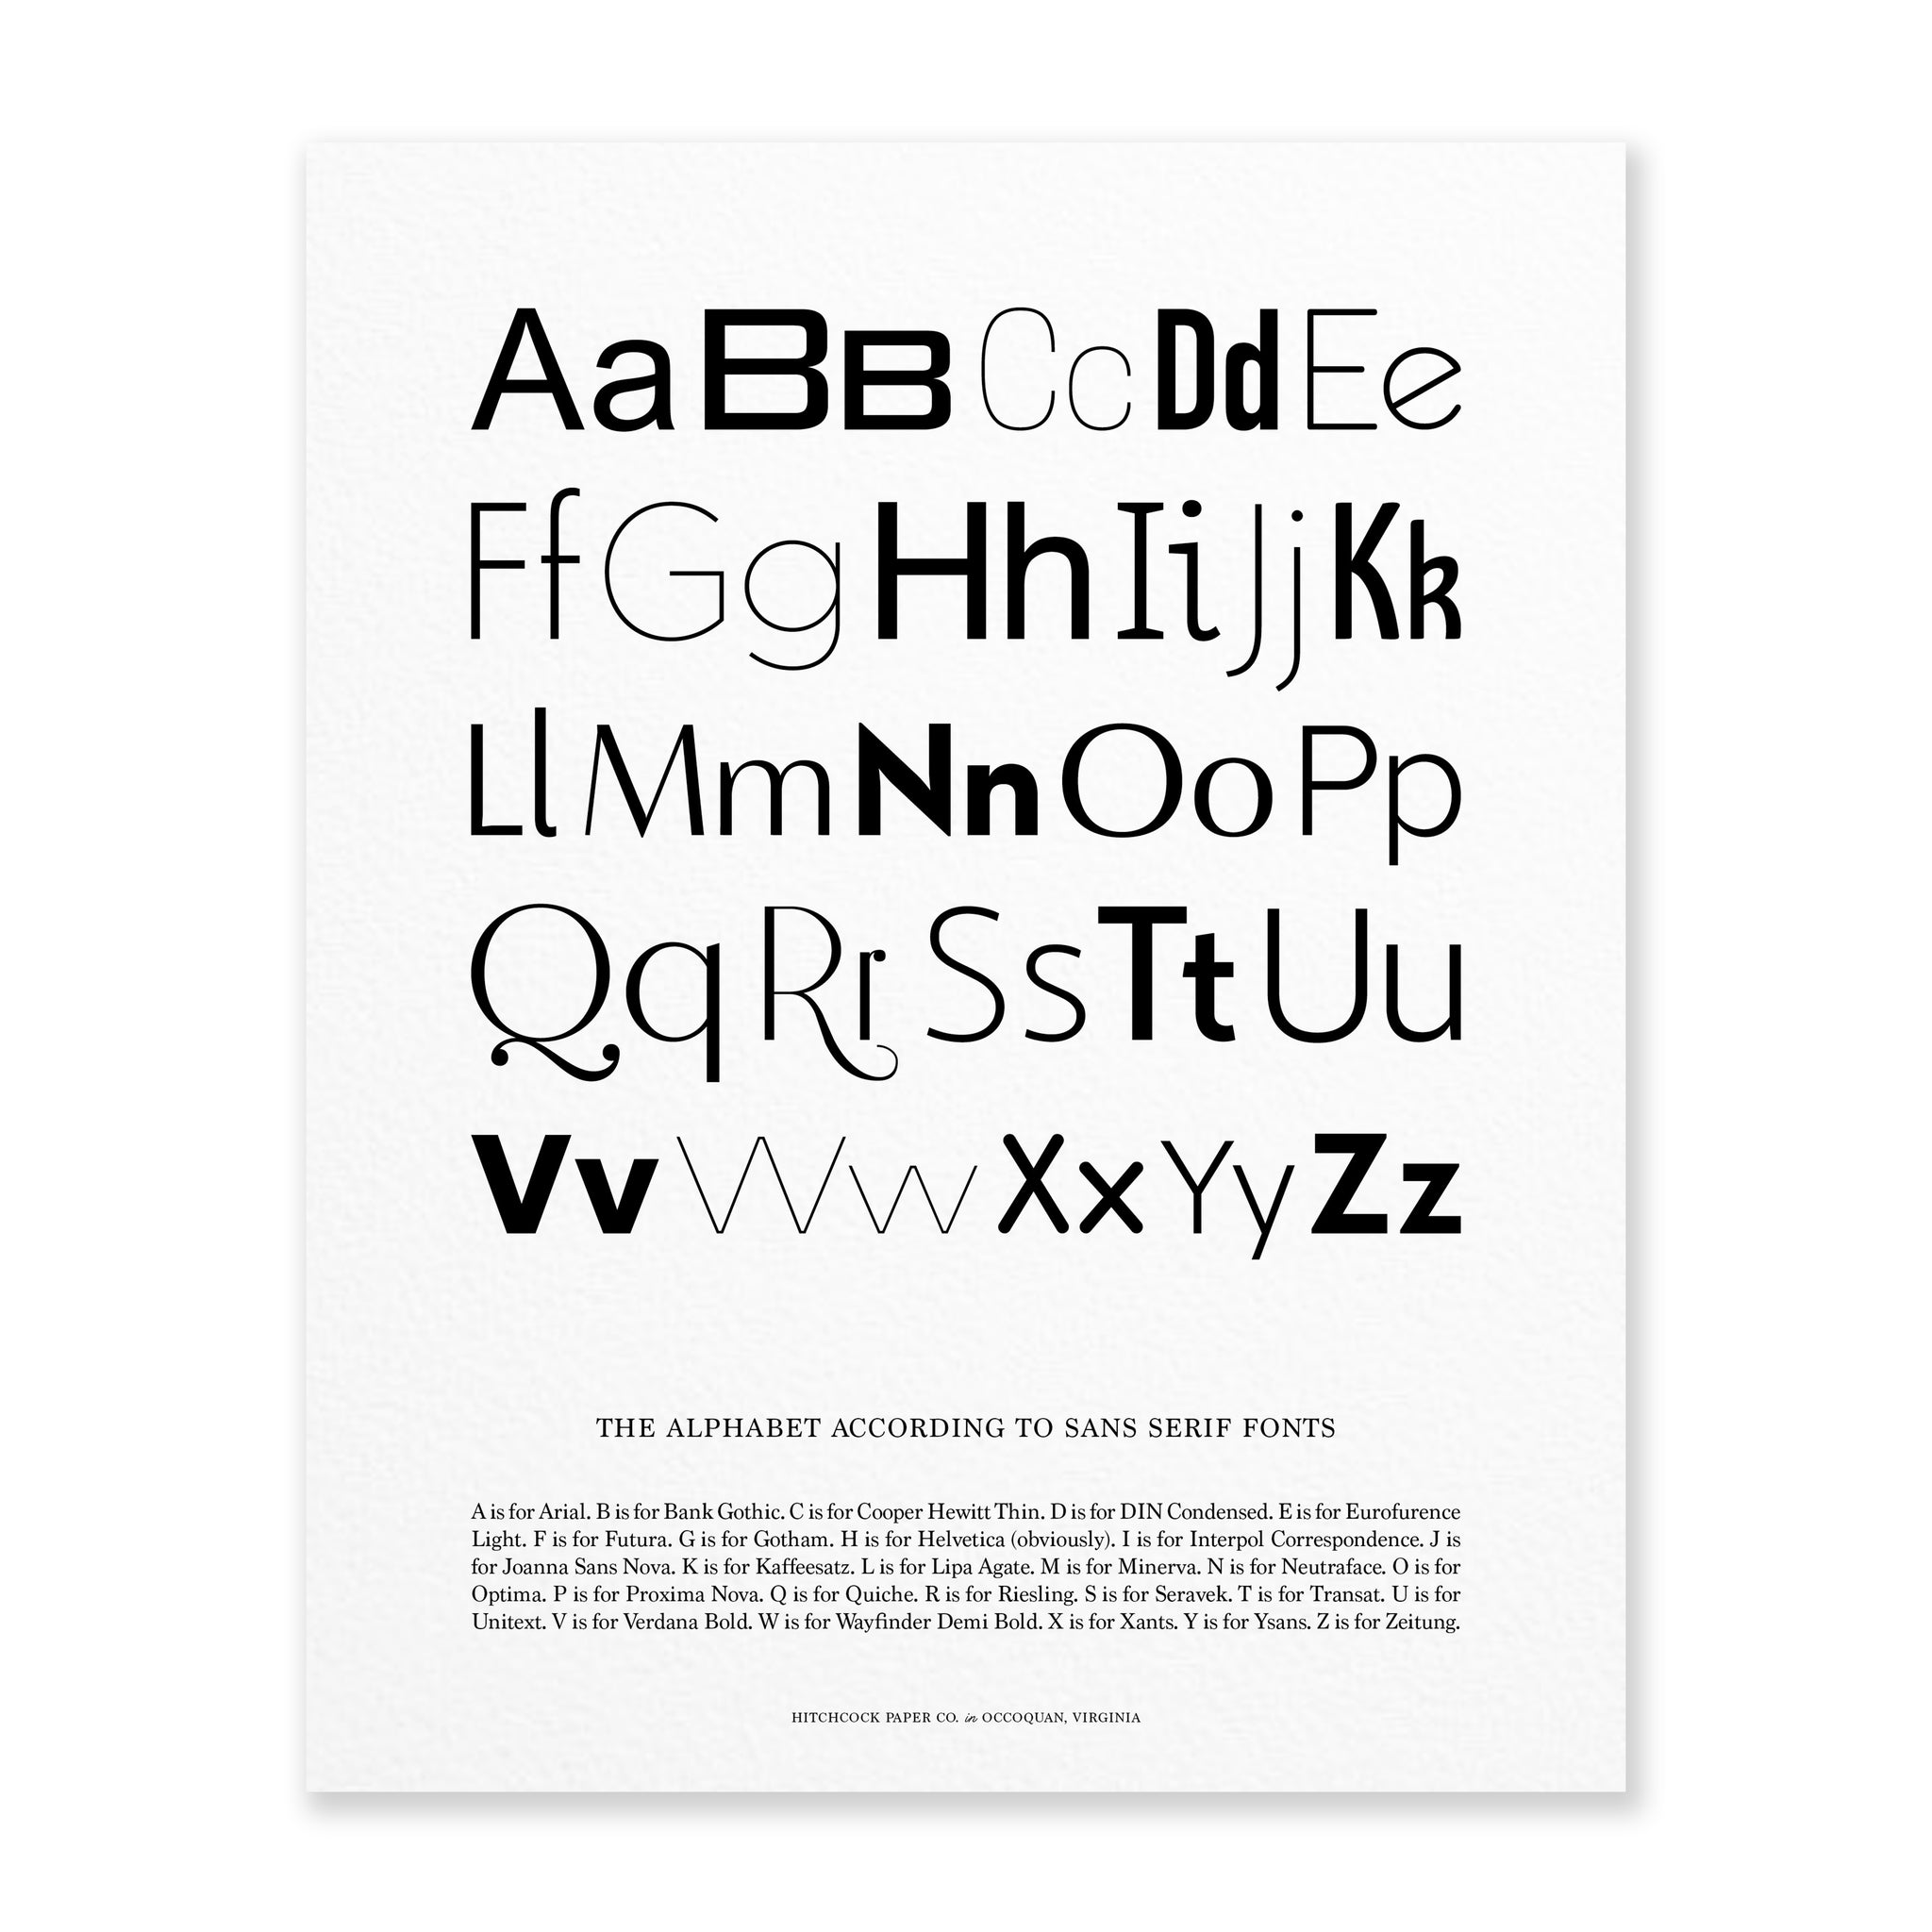 The Alphabet According to San Serif Fonts